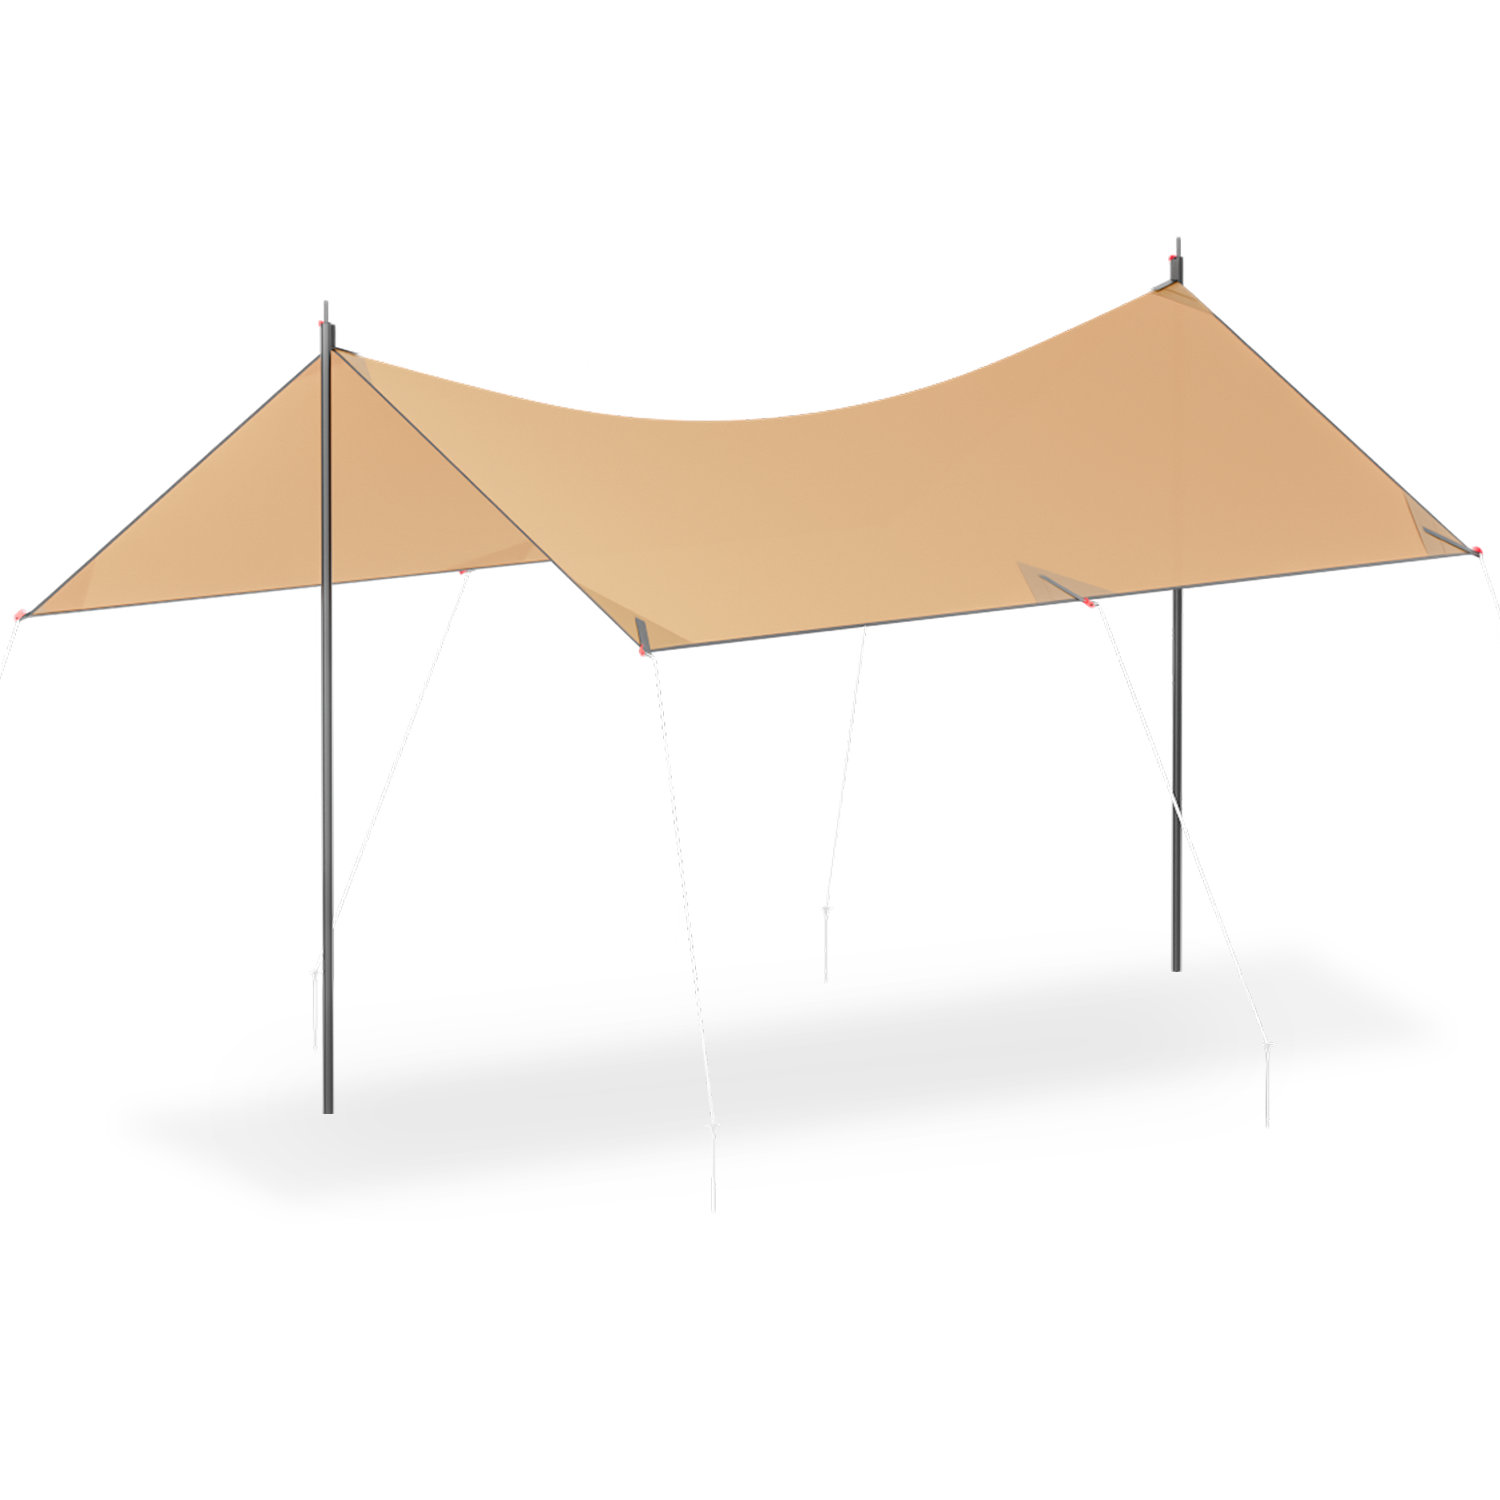 Waterproof Camping Tent Tarp Shelter Hammock Awning Sun Shade Rain Cover  Pad Mat